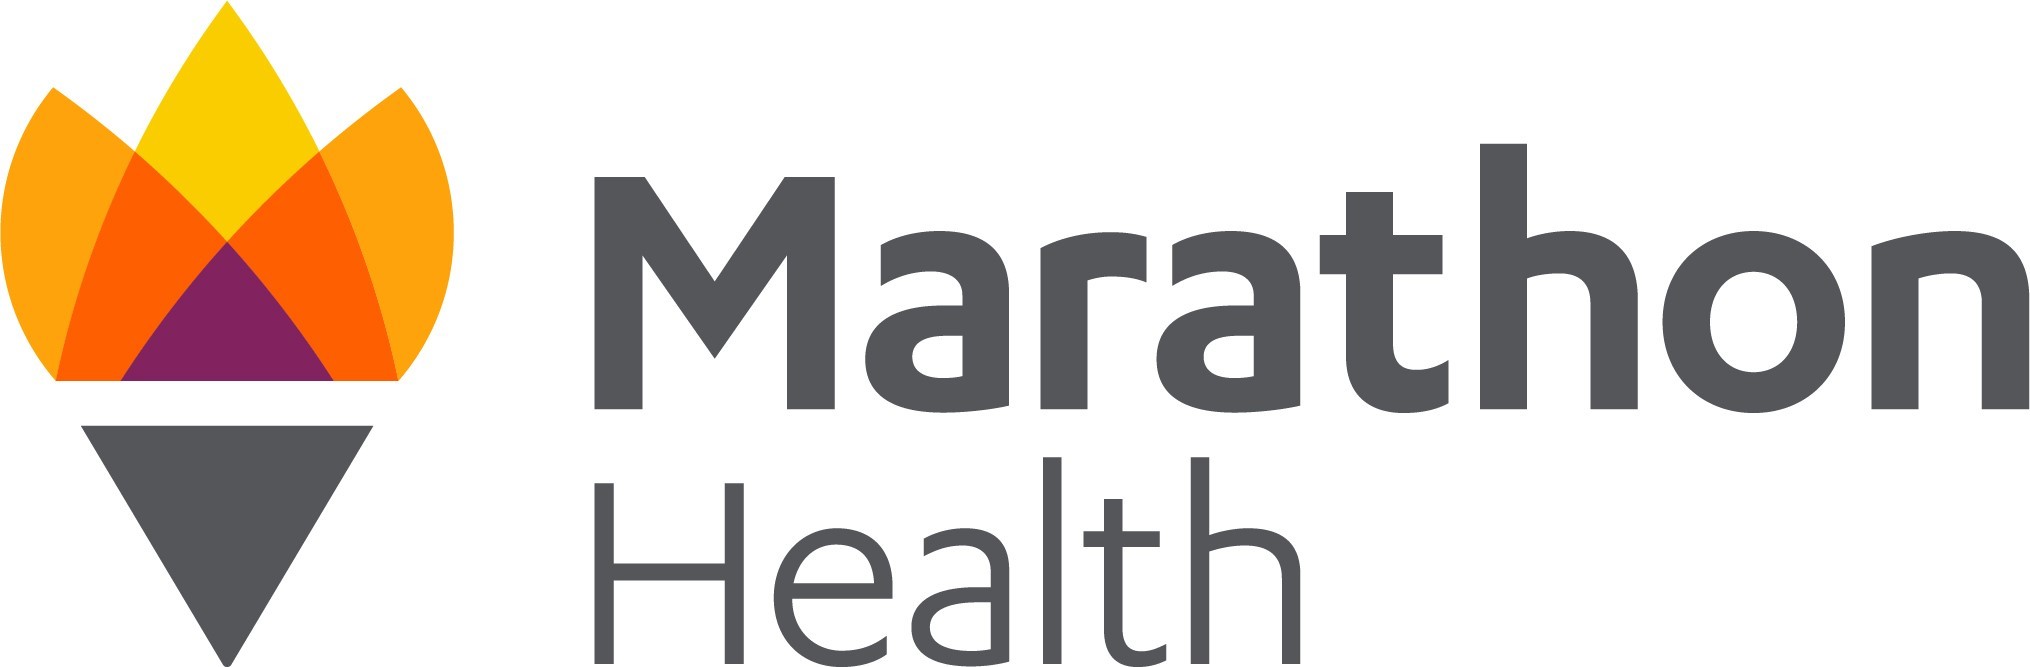 Marathon Health logo